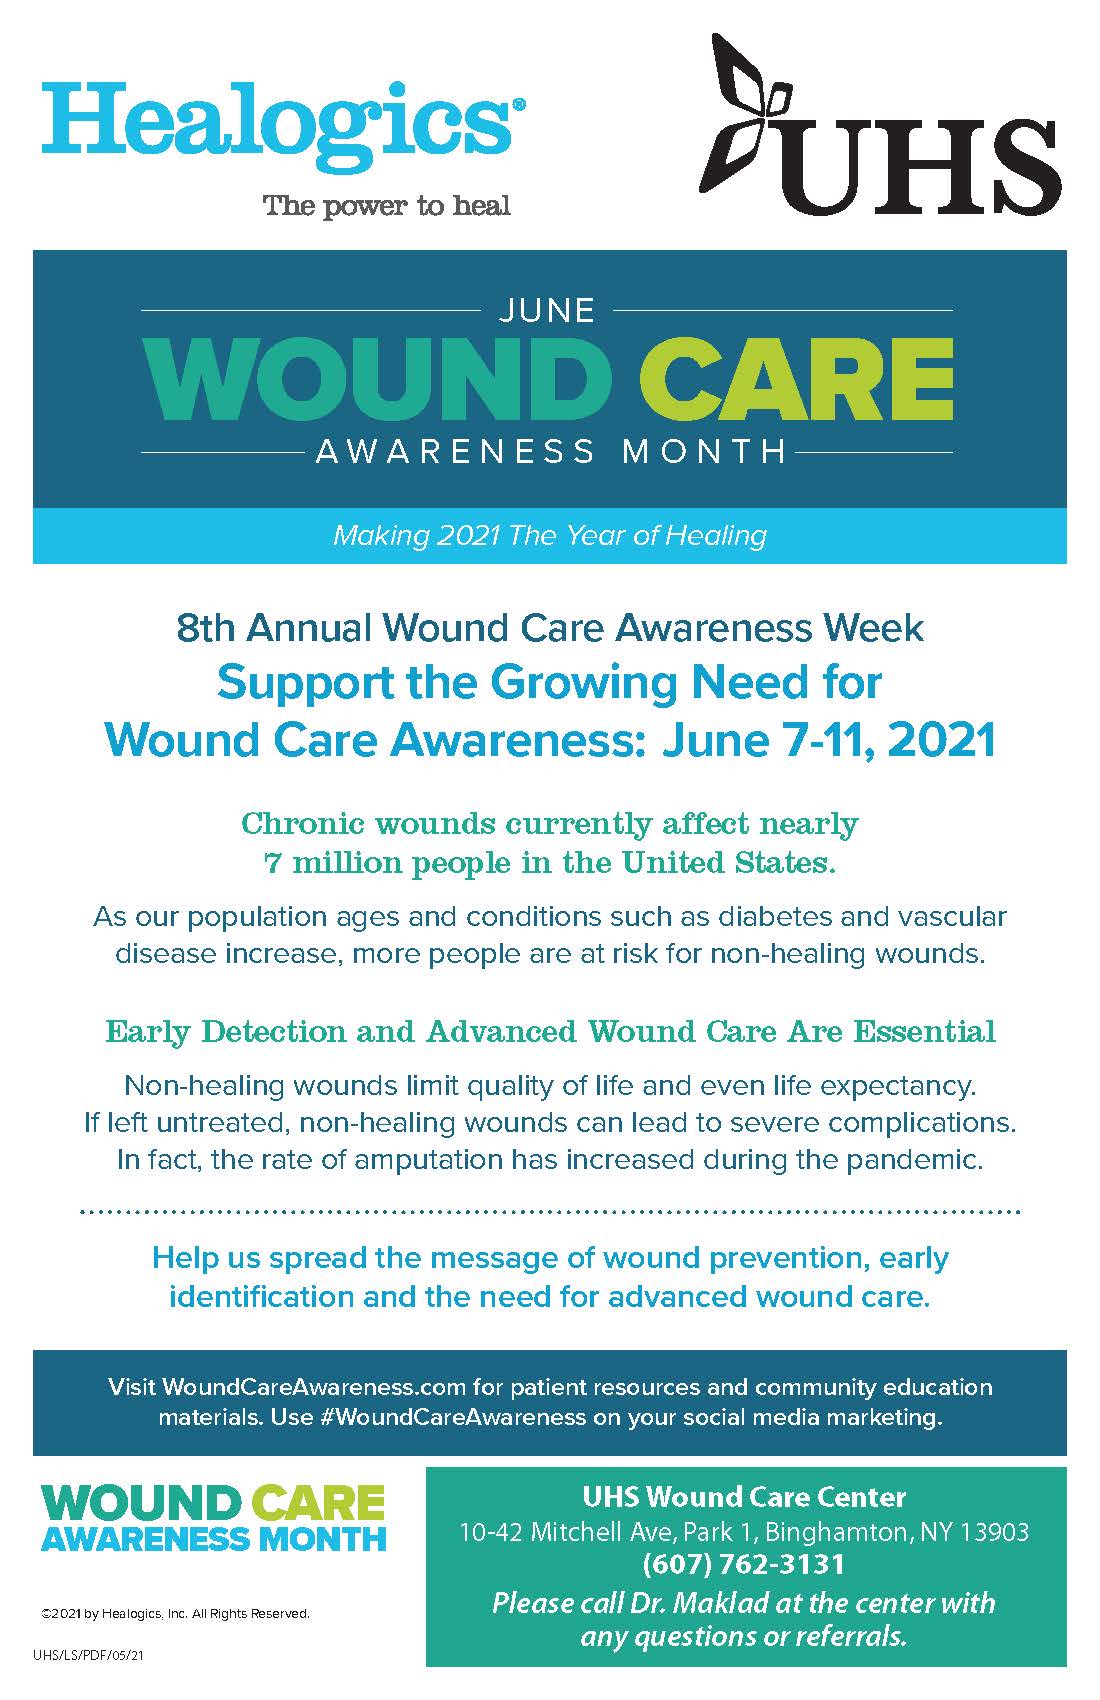 wound_care_week.jpg